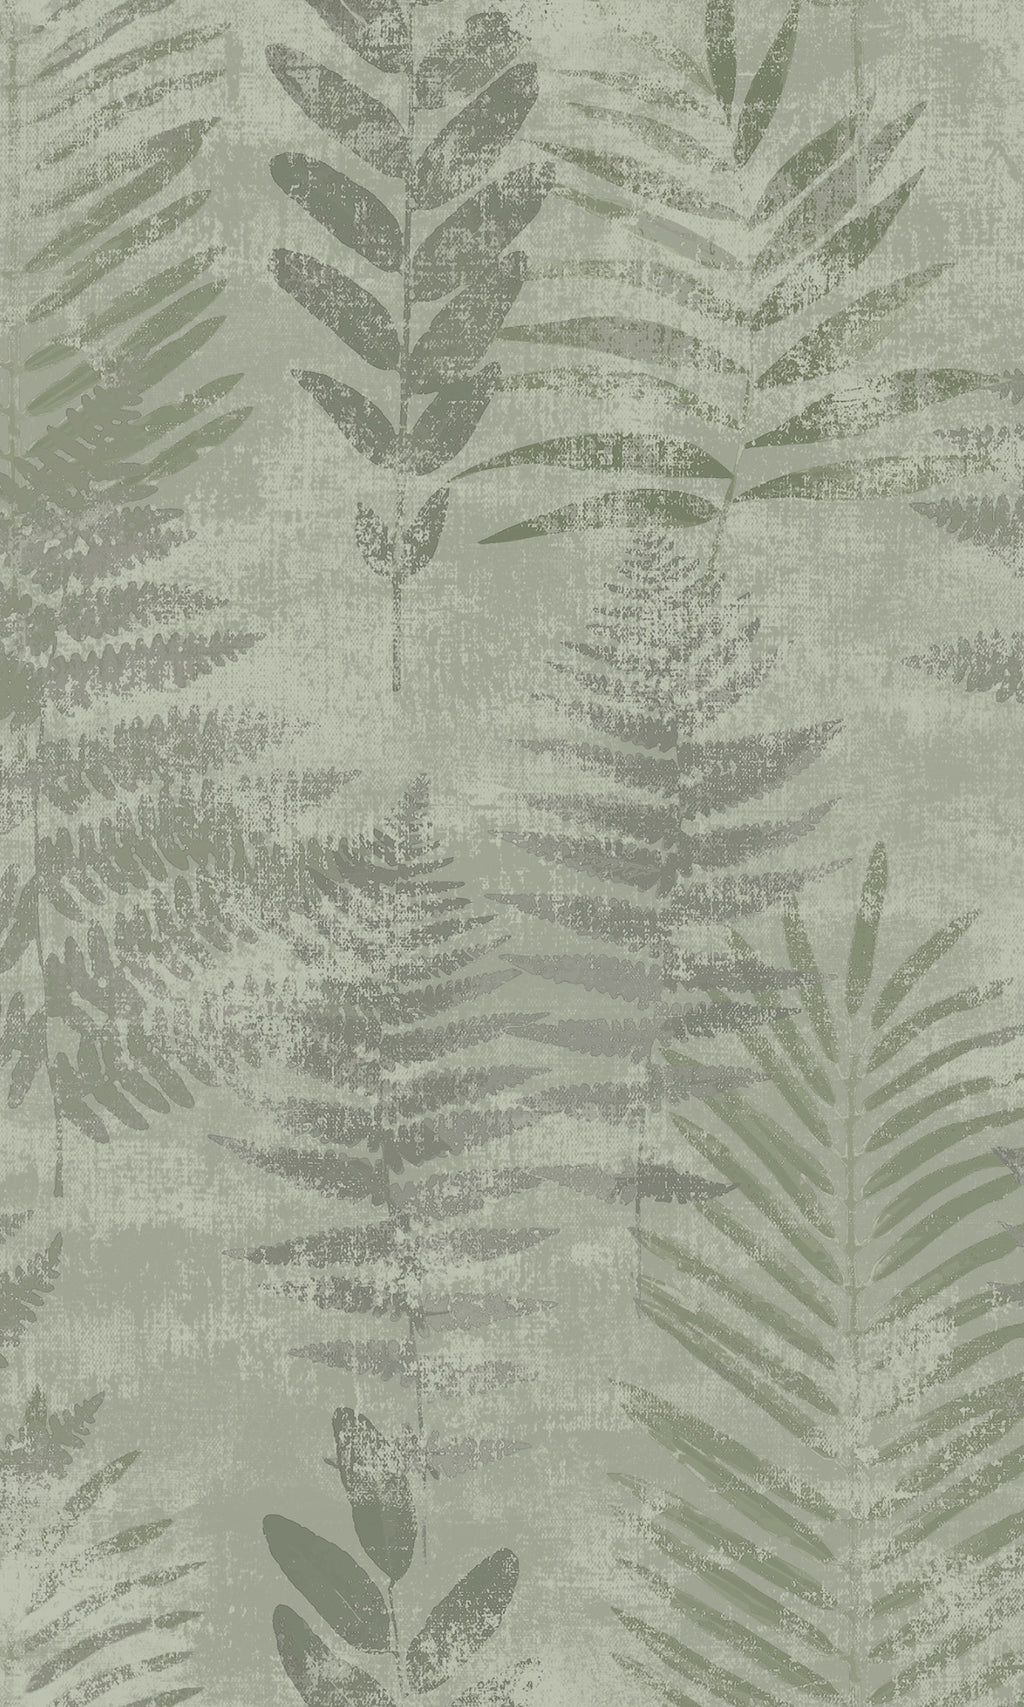 Forest Fern Leaves Tropical Wallpaper R8182